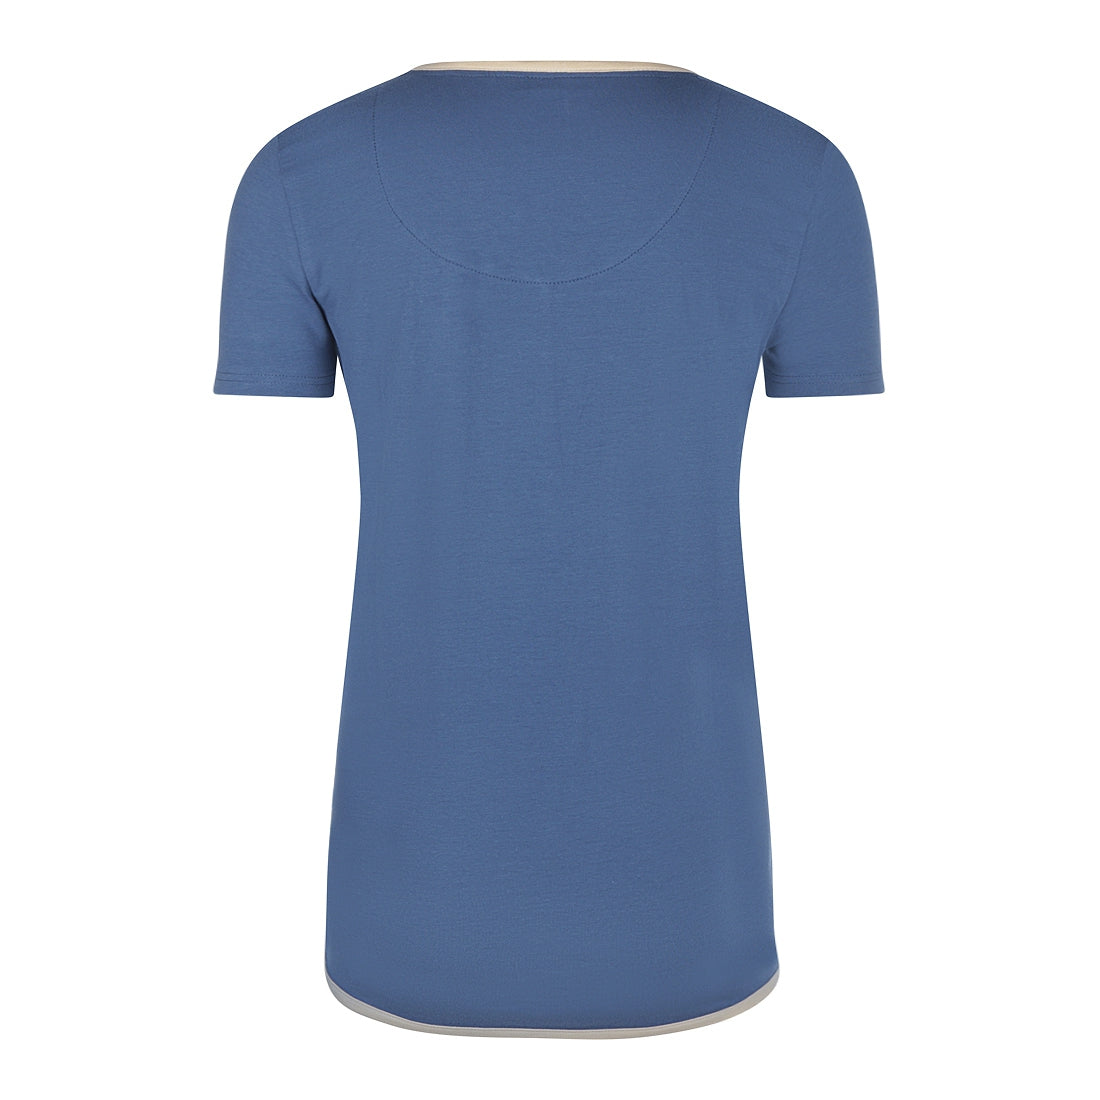 Women t-shirt with placket R51130-38 13 Dark blue